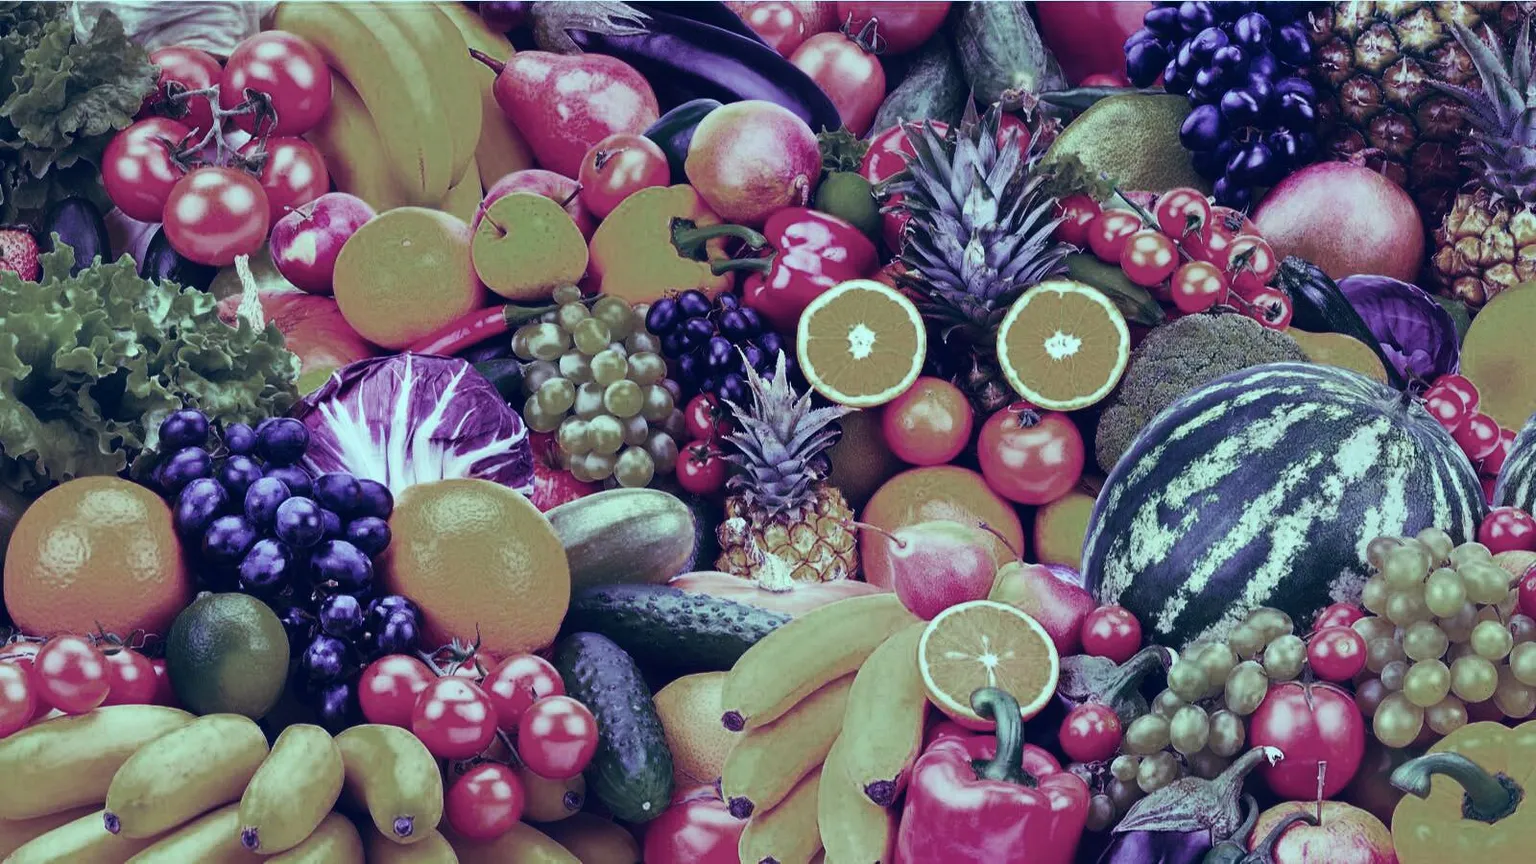 World's largest fruit and veg producer plans to expand blockchain program. Image: Shutterstock